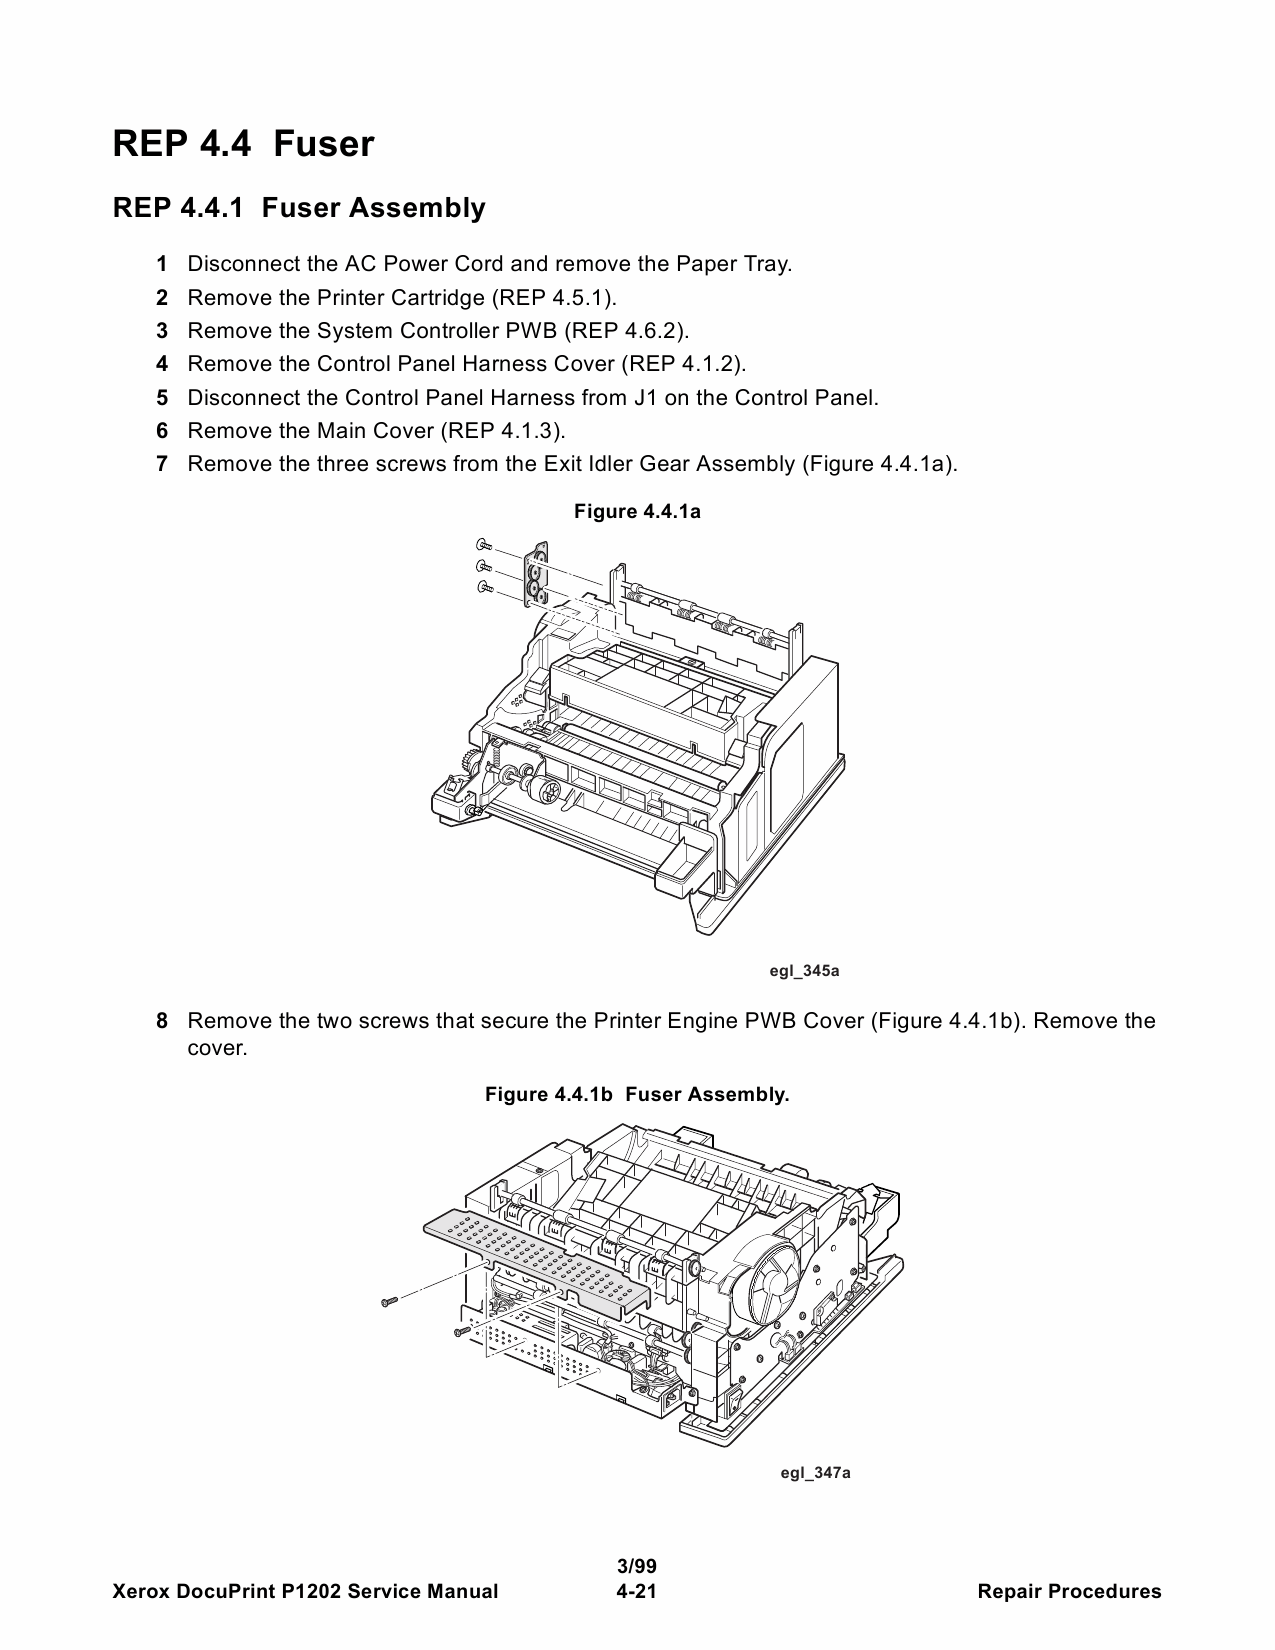 Xerox DocuPrint P1202 Parts List and Service Manual-4